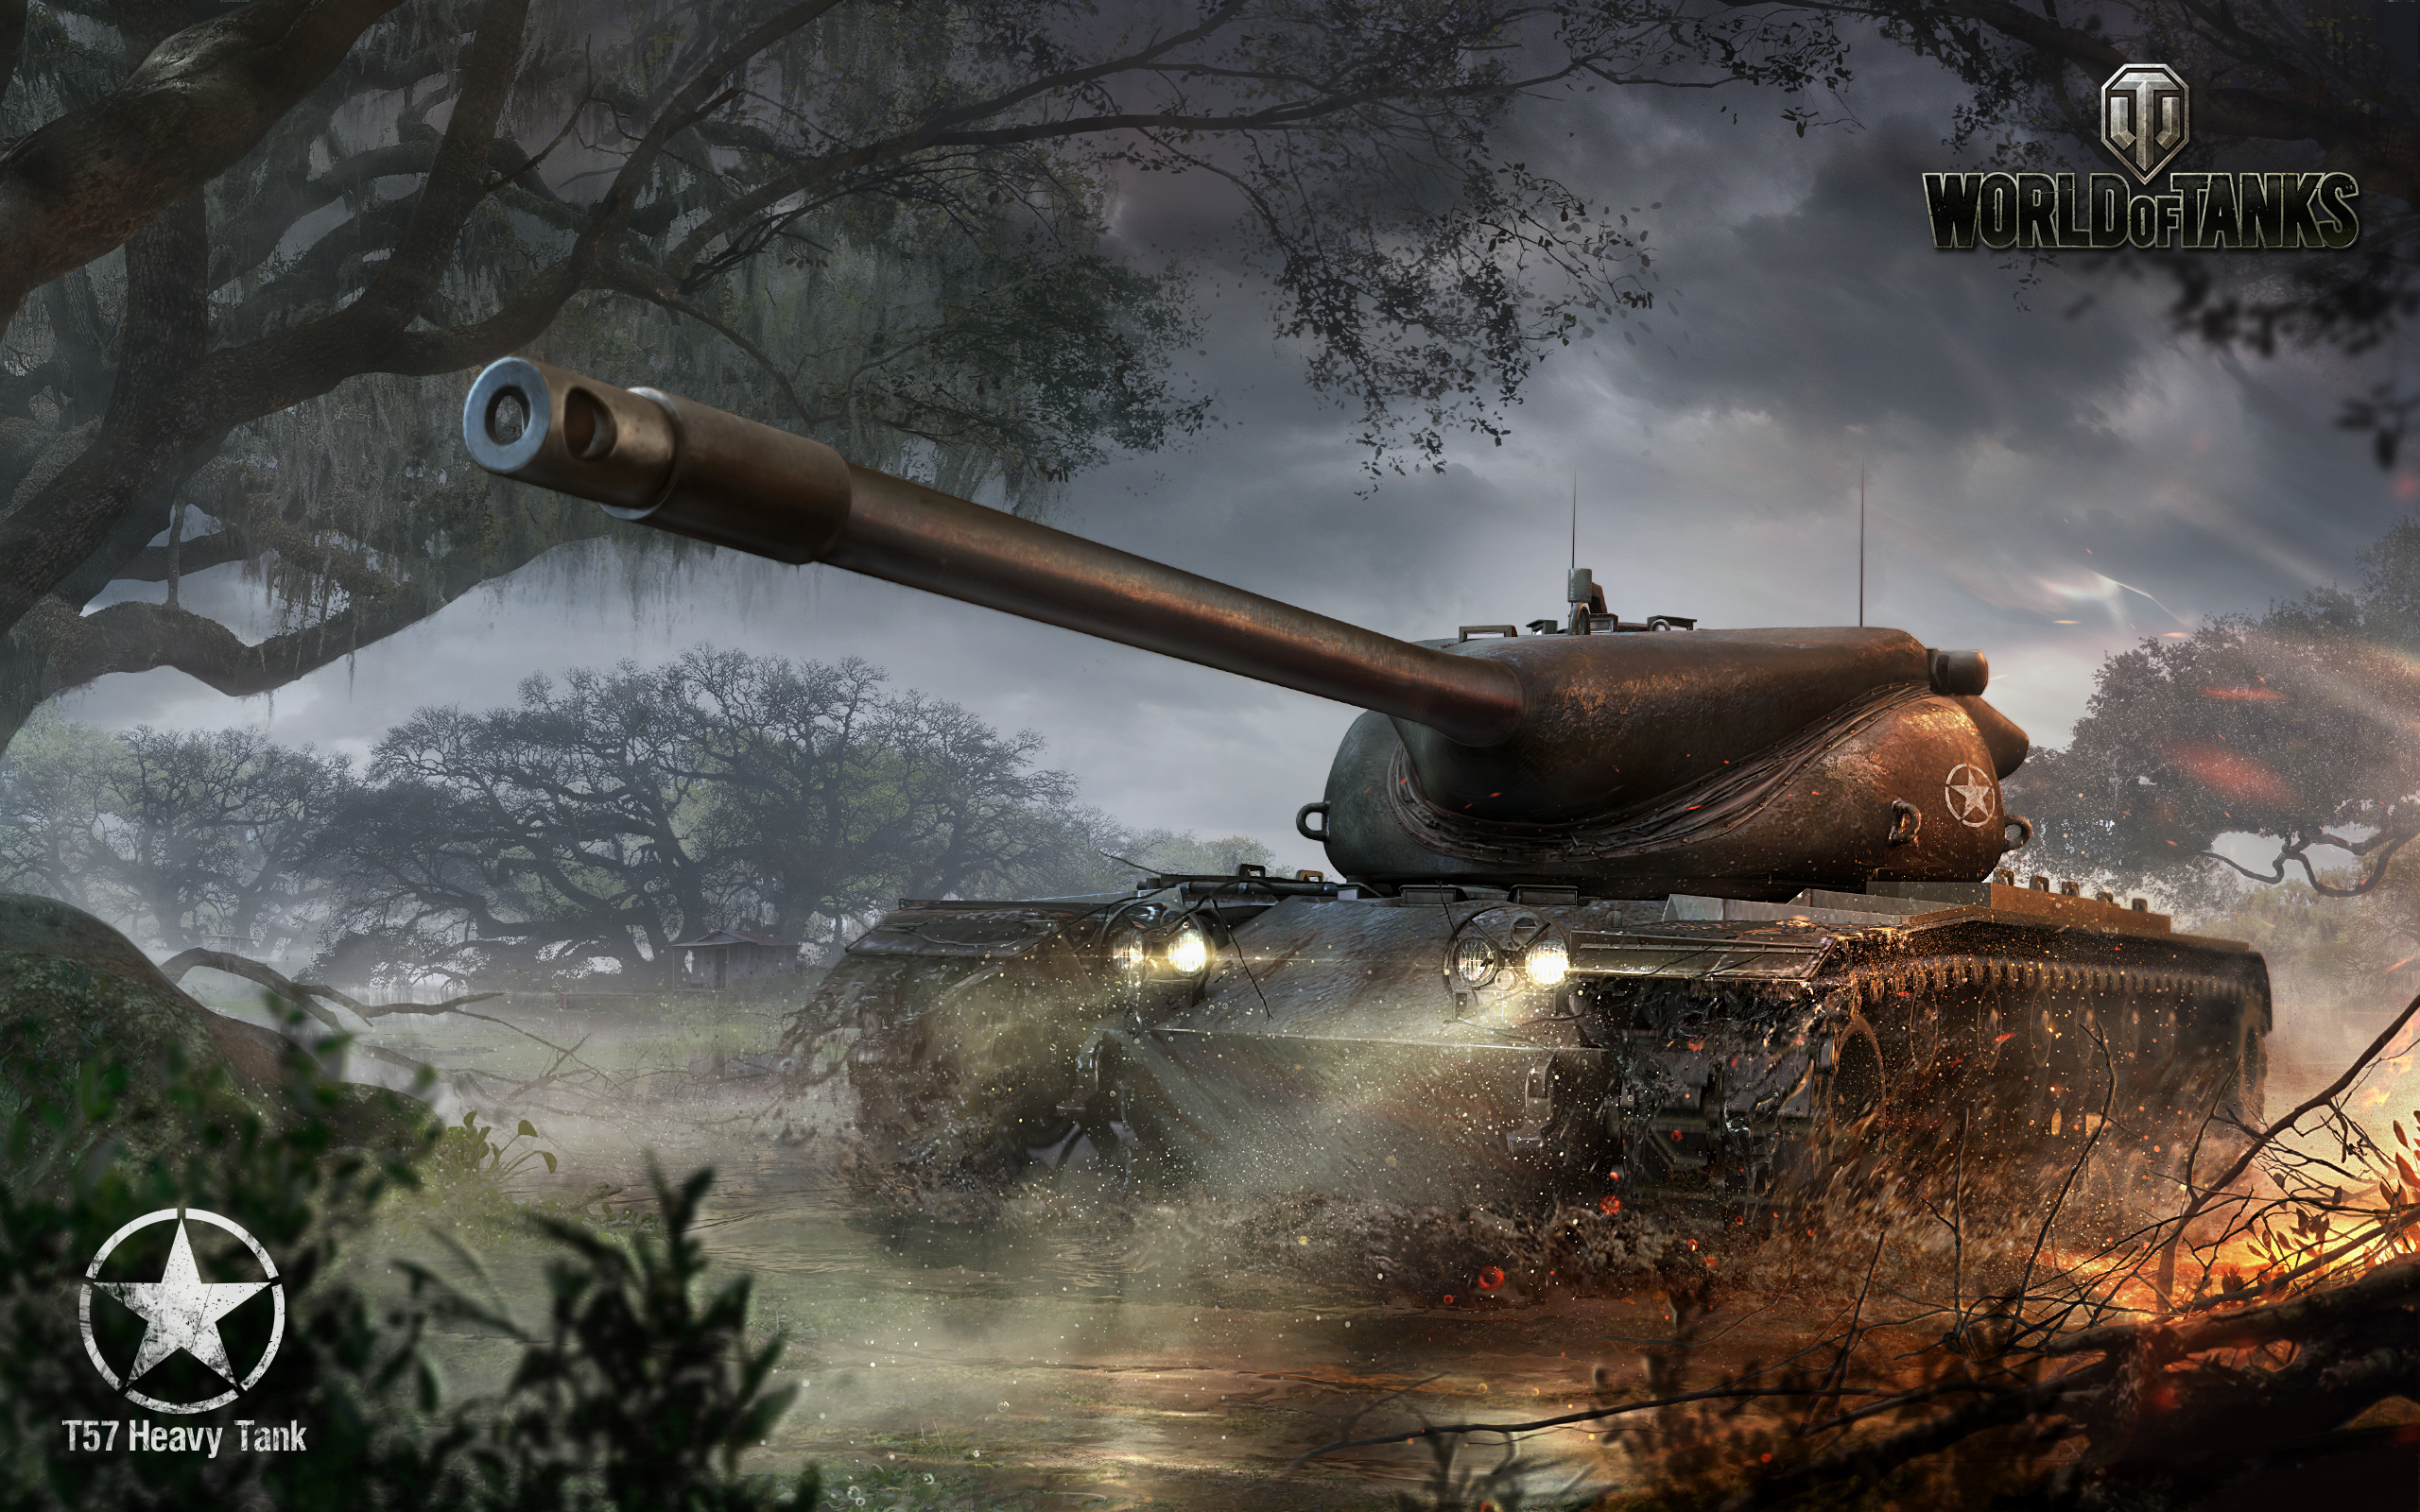     T57 Heavy Tank Art  war world of tanks      wot 2560 x 1600